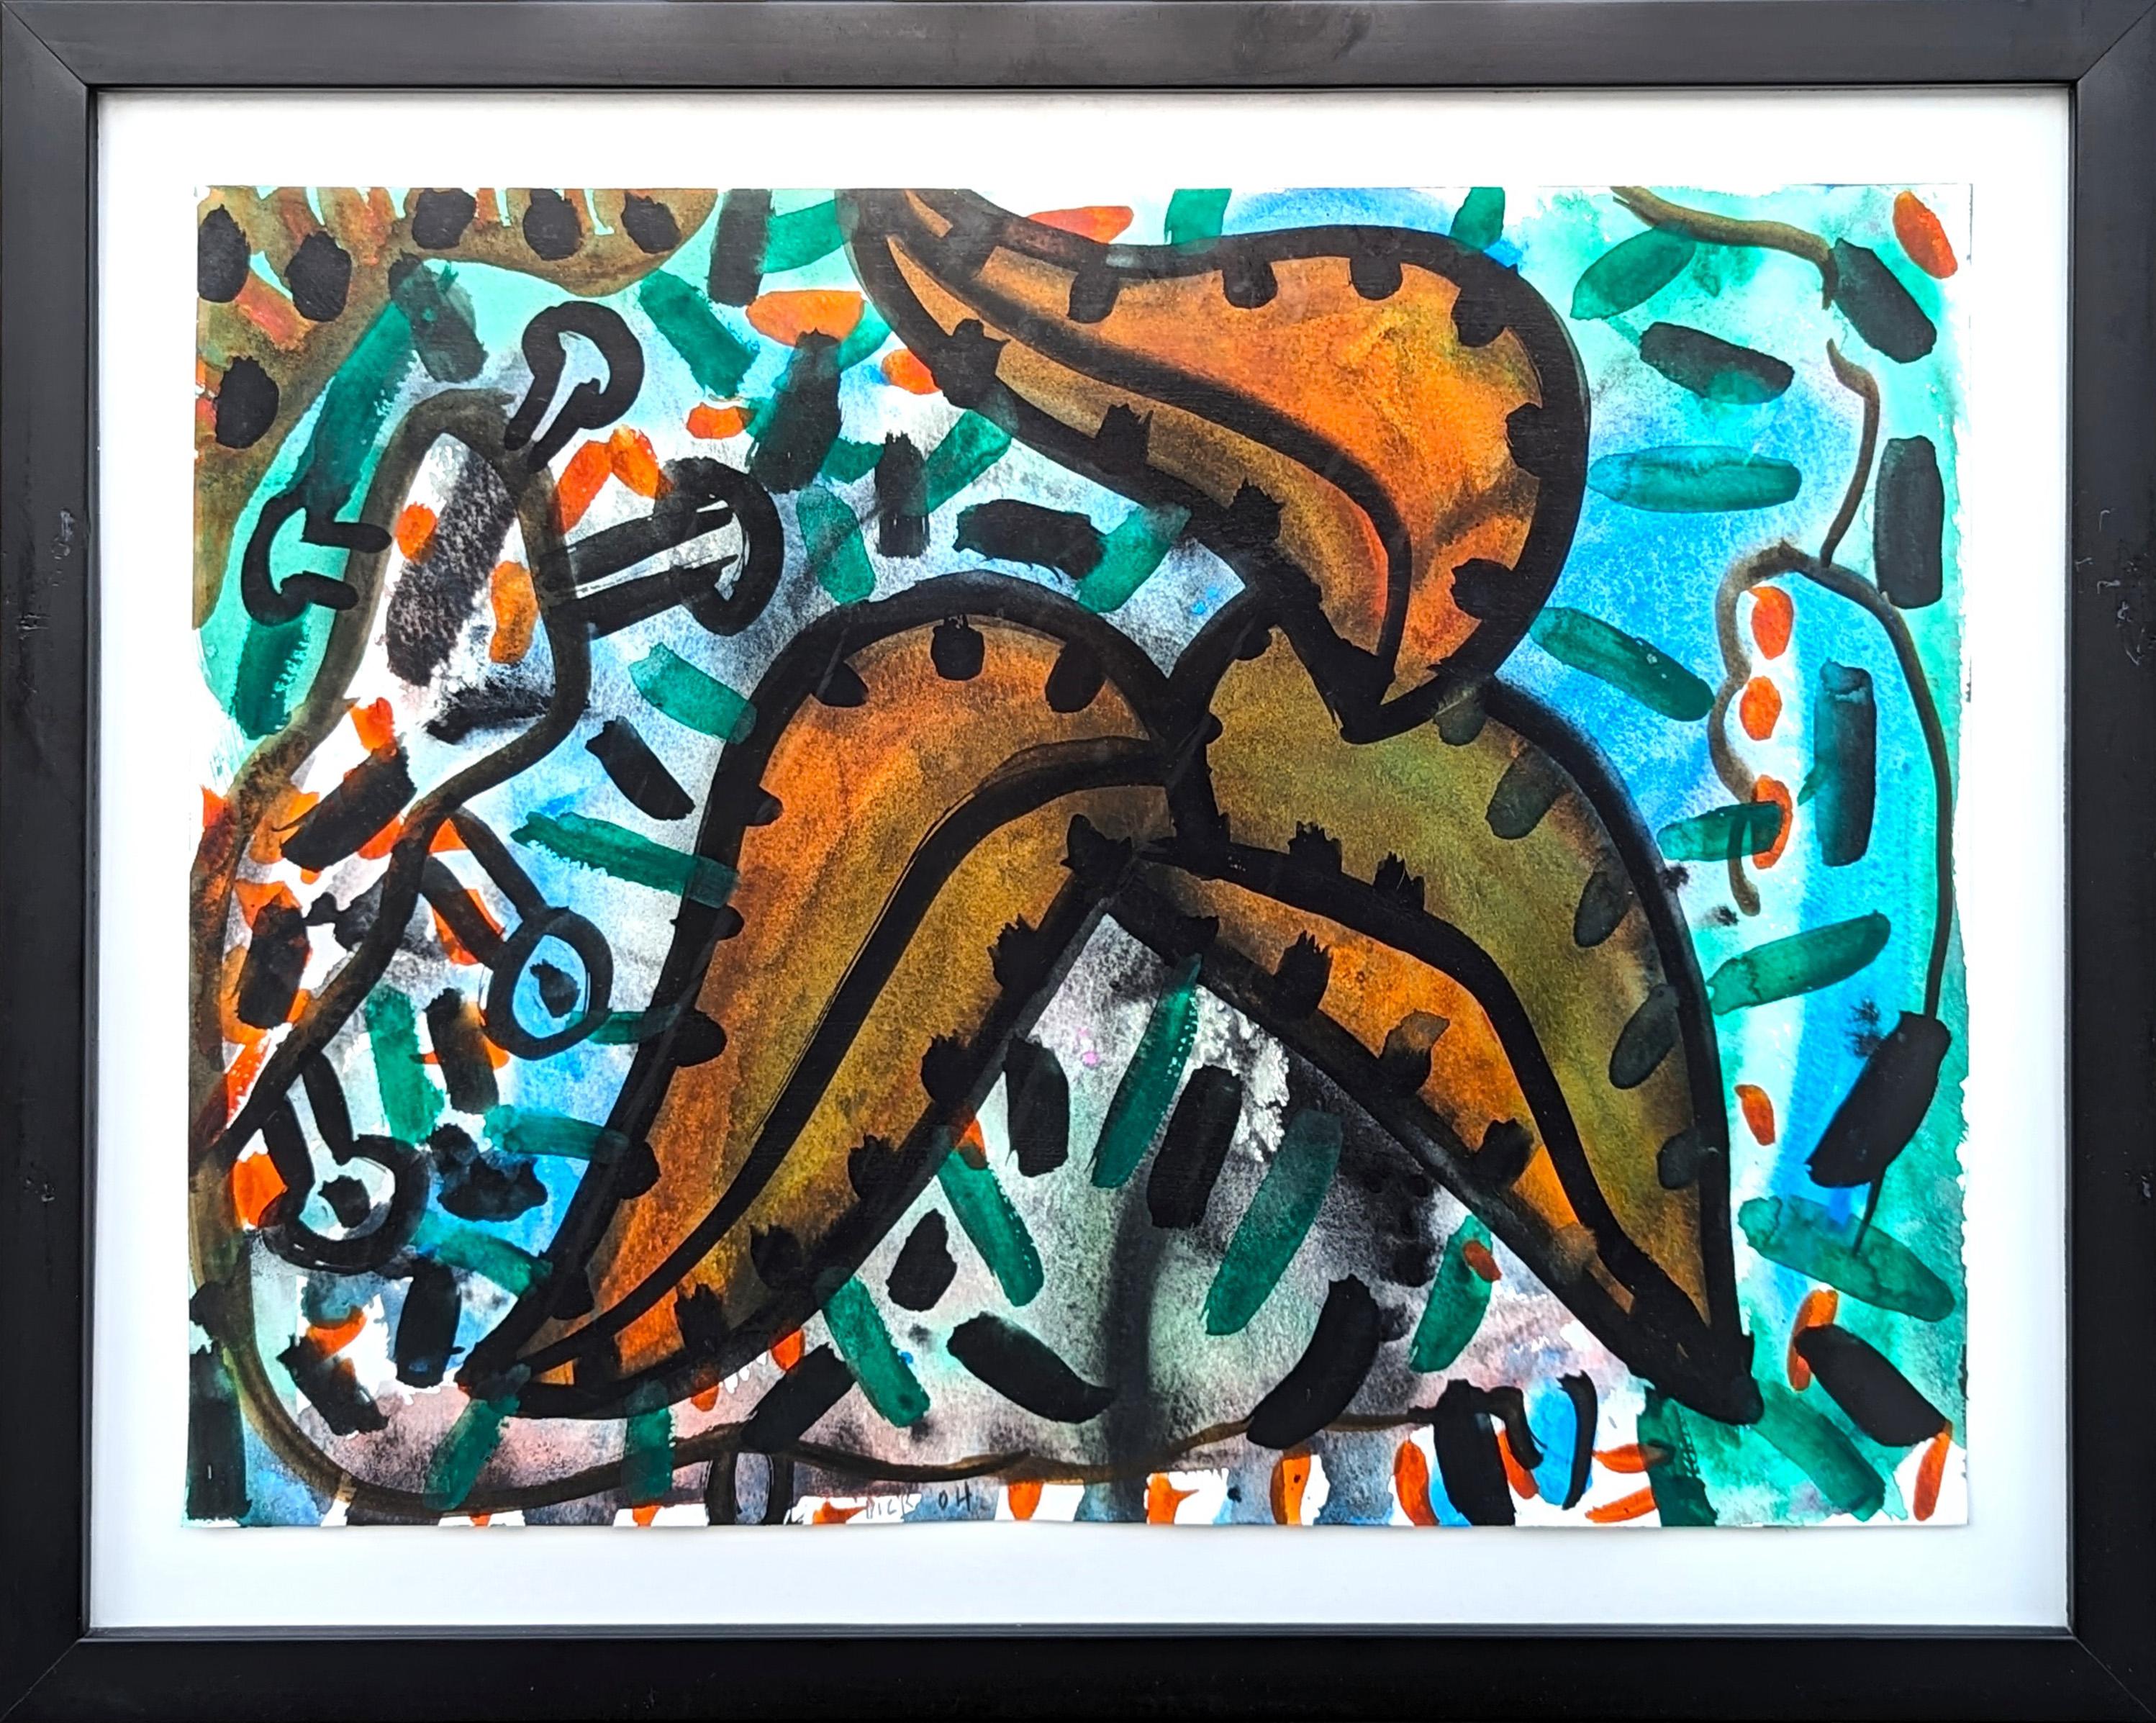 Dick Wray Abstract Drawing – Modernes abstraktes blau-orange getöntes Aquarellgemälde mit organischen Blättern